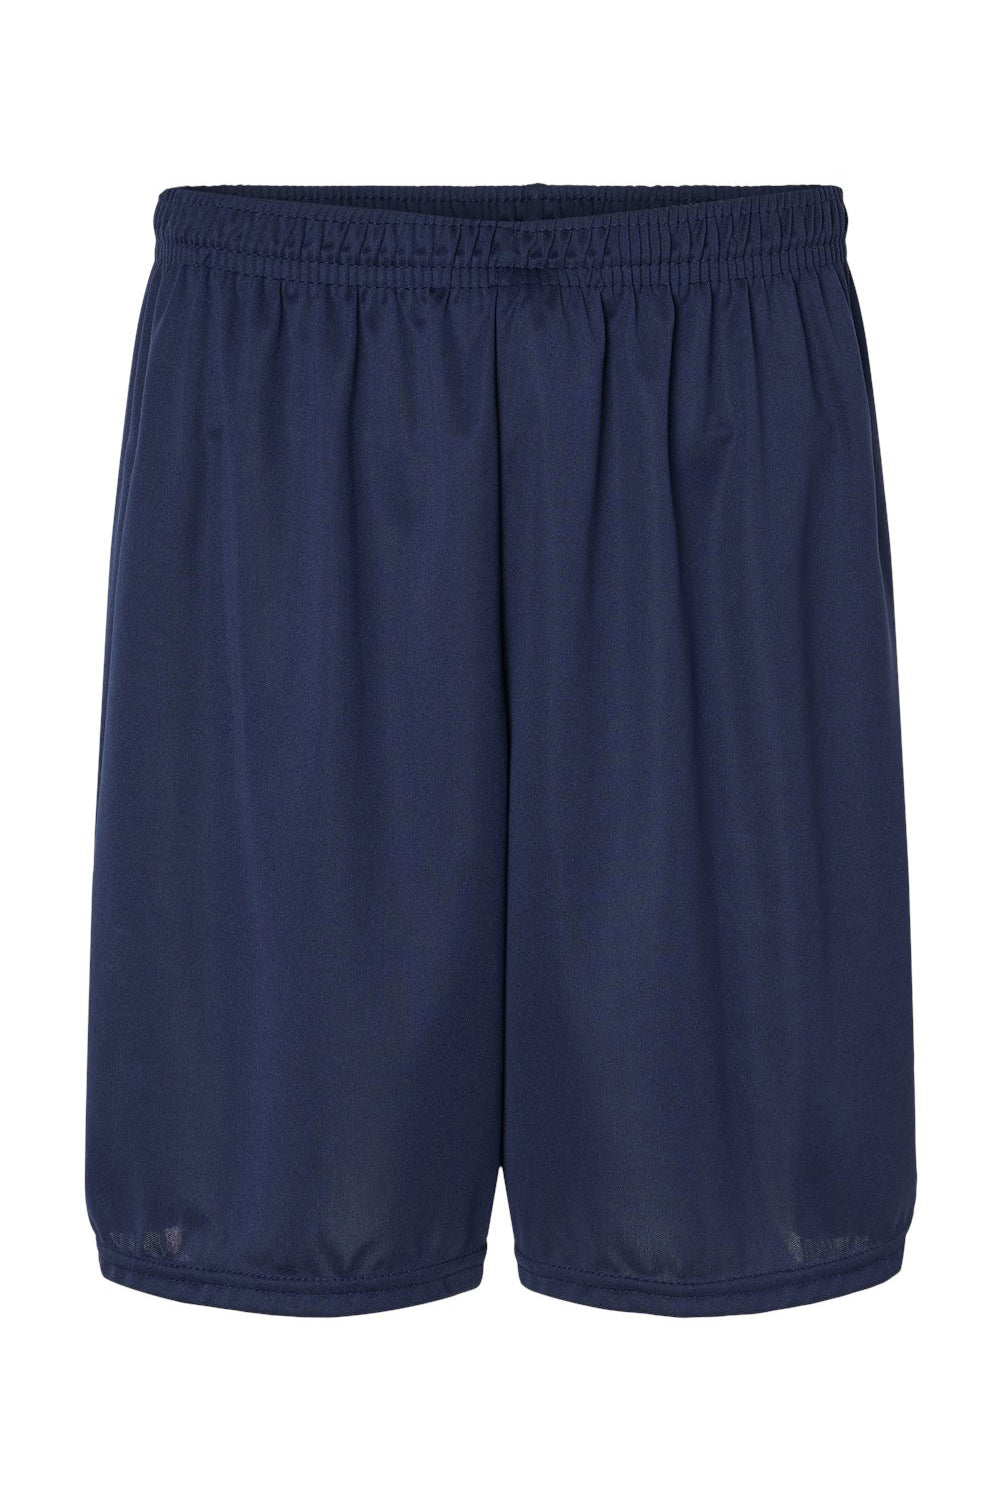 Augusta Sportswear 1425 Mens Octane Moisture Wicking Shorts Navy Blue Flat Front